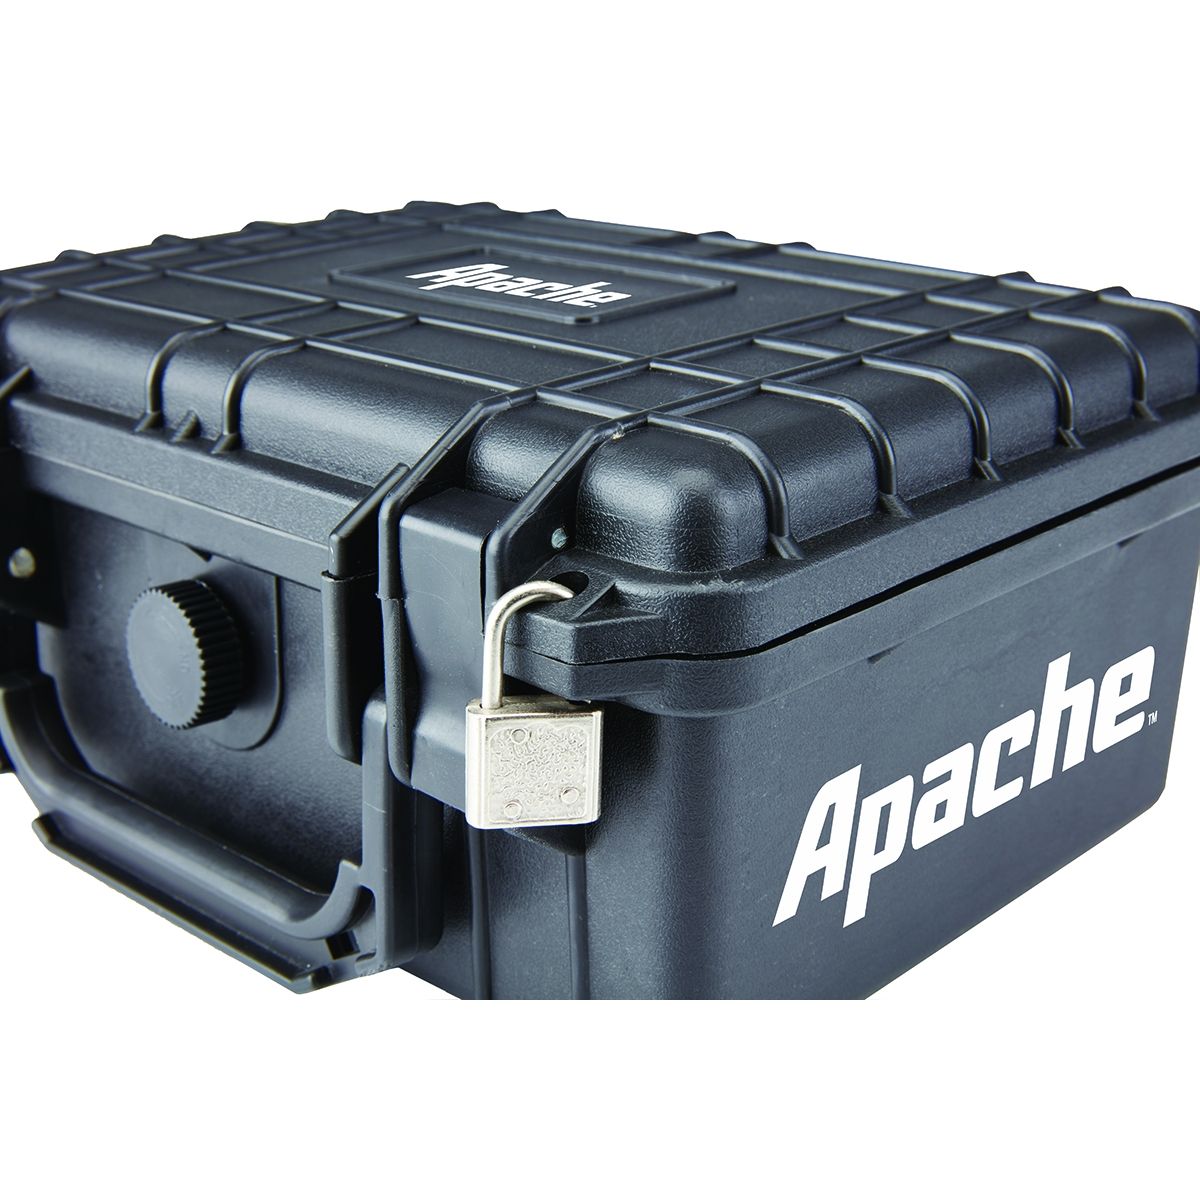 Apache Watertight Protective Hardcase